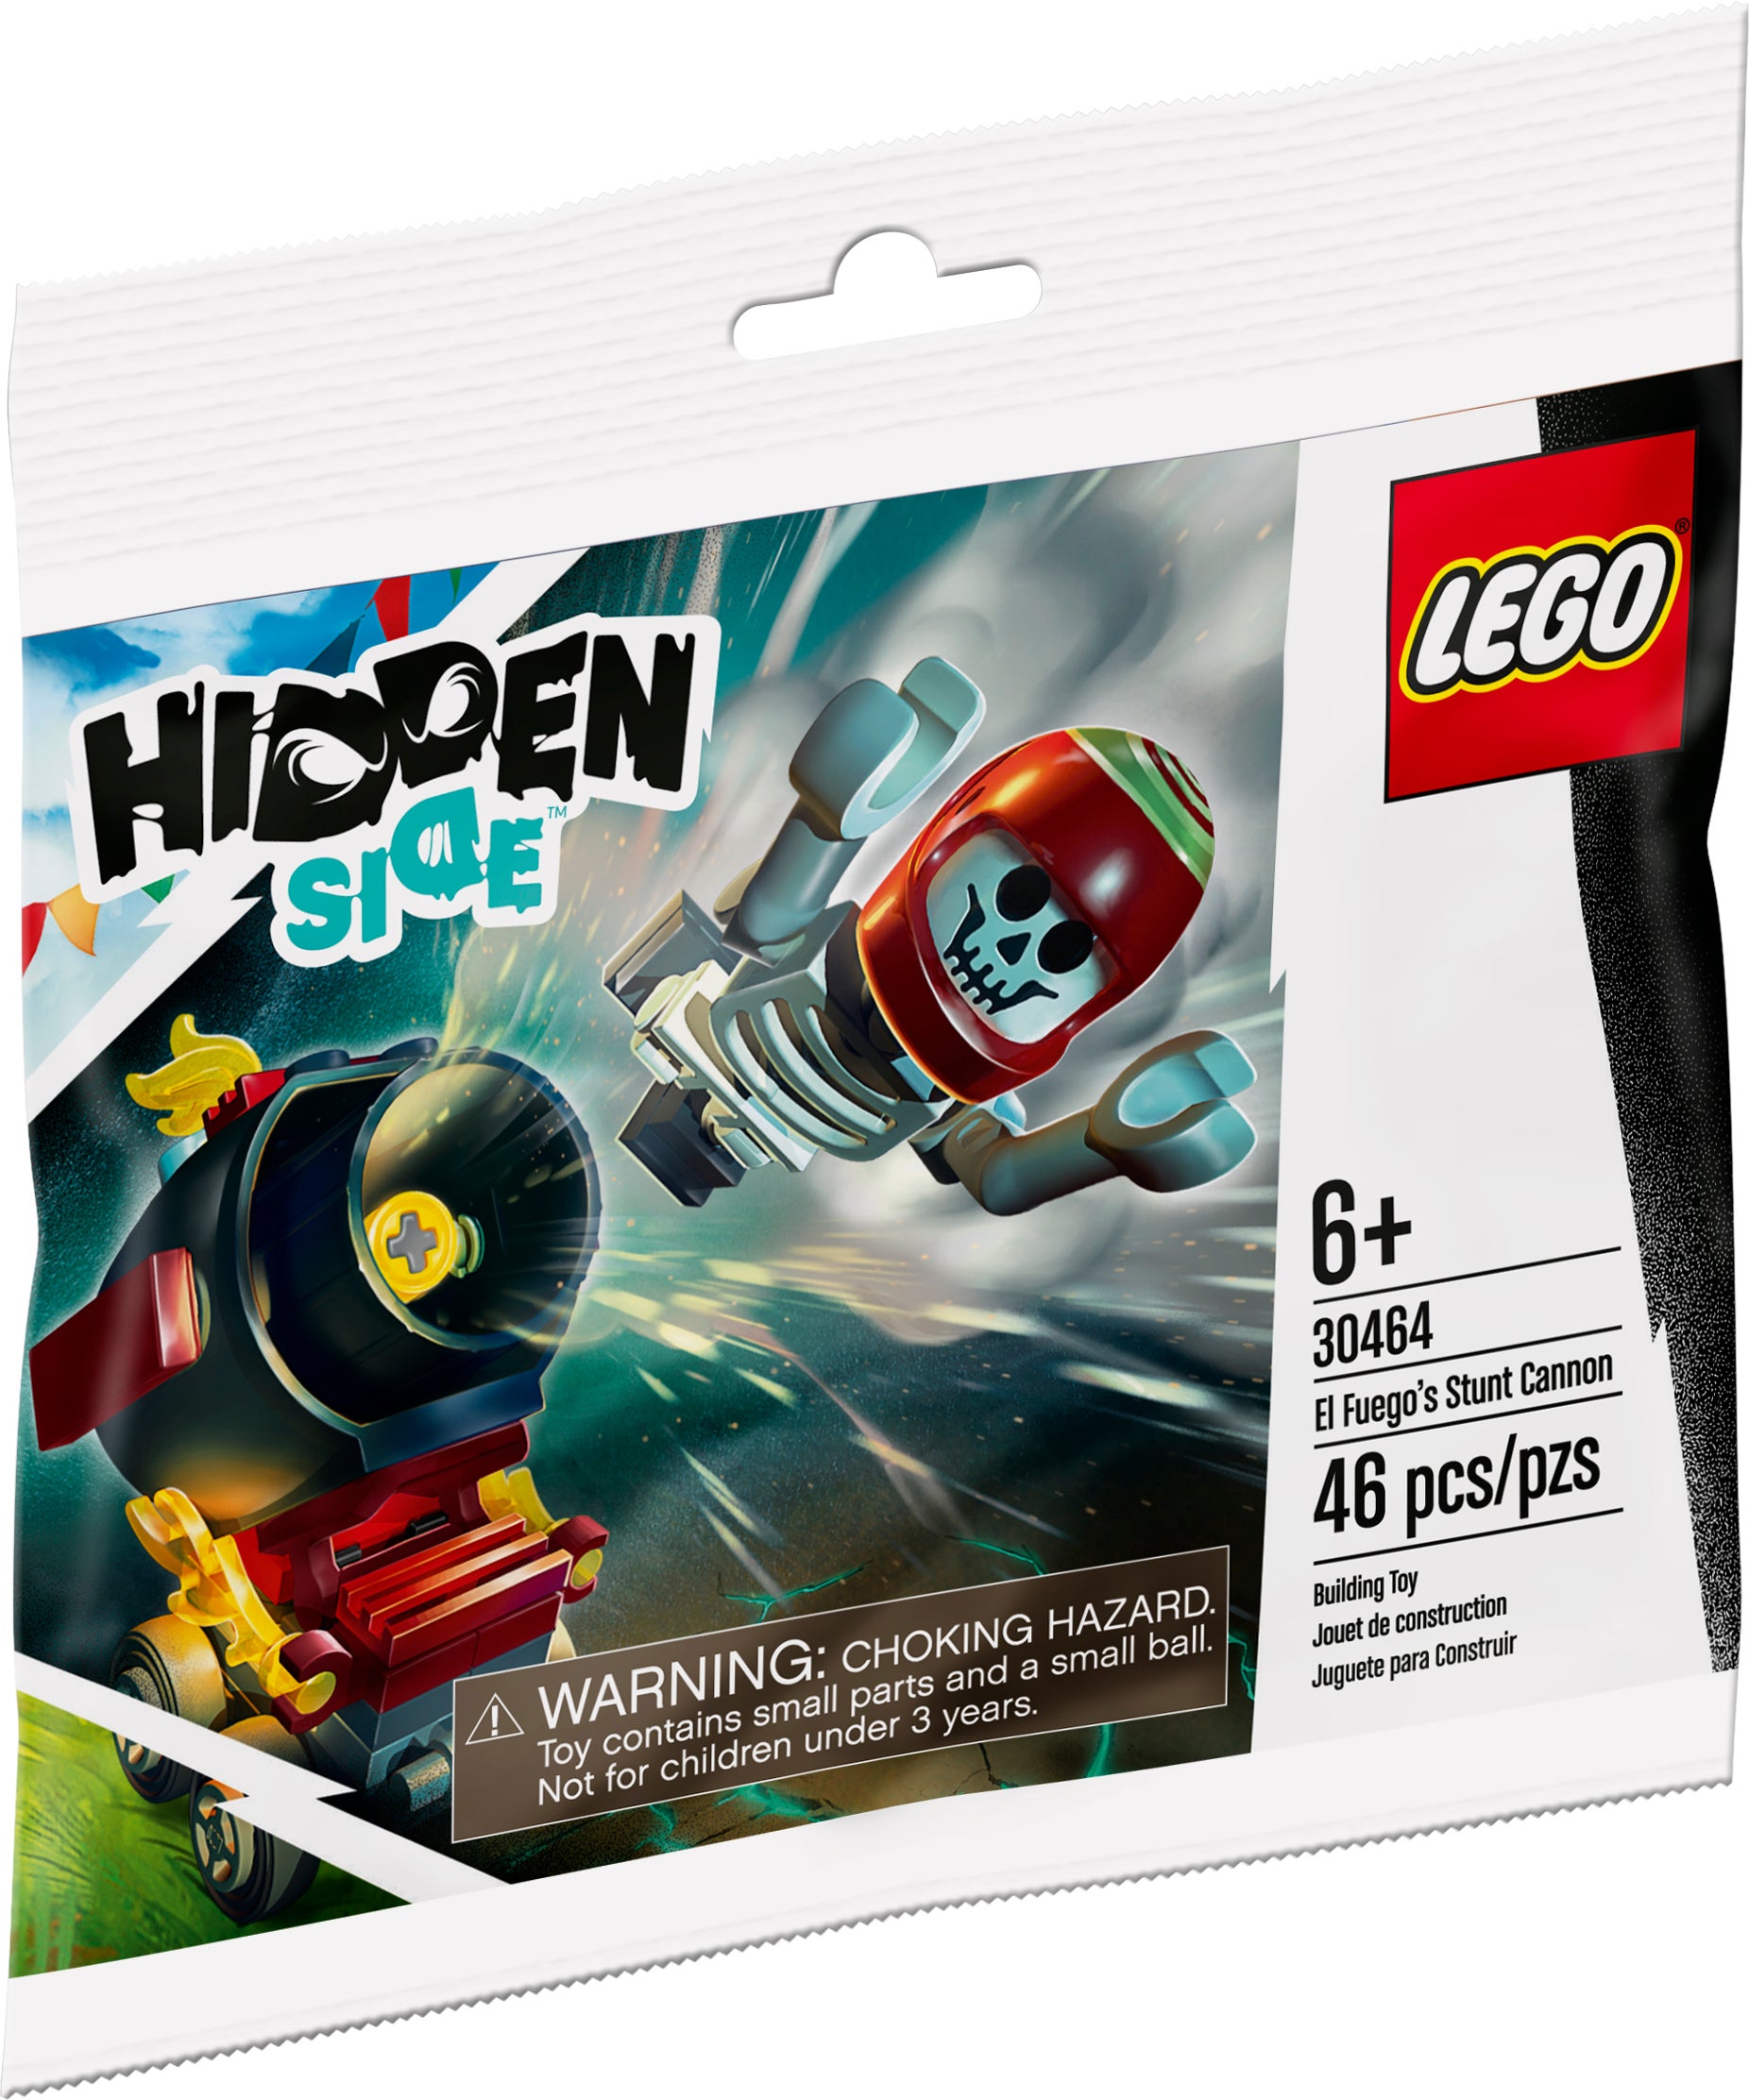 LEGO Hidden Side El Fuego's Stunt Cannon Polybag Set 30464 Bagged